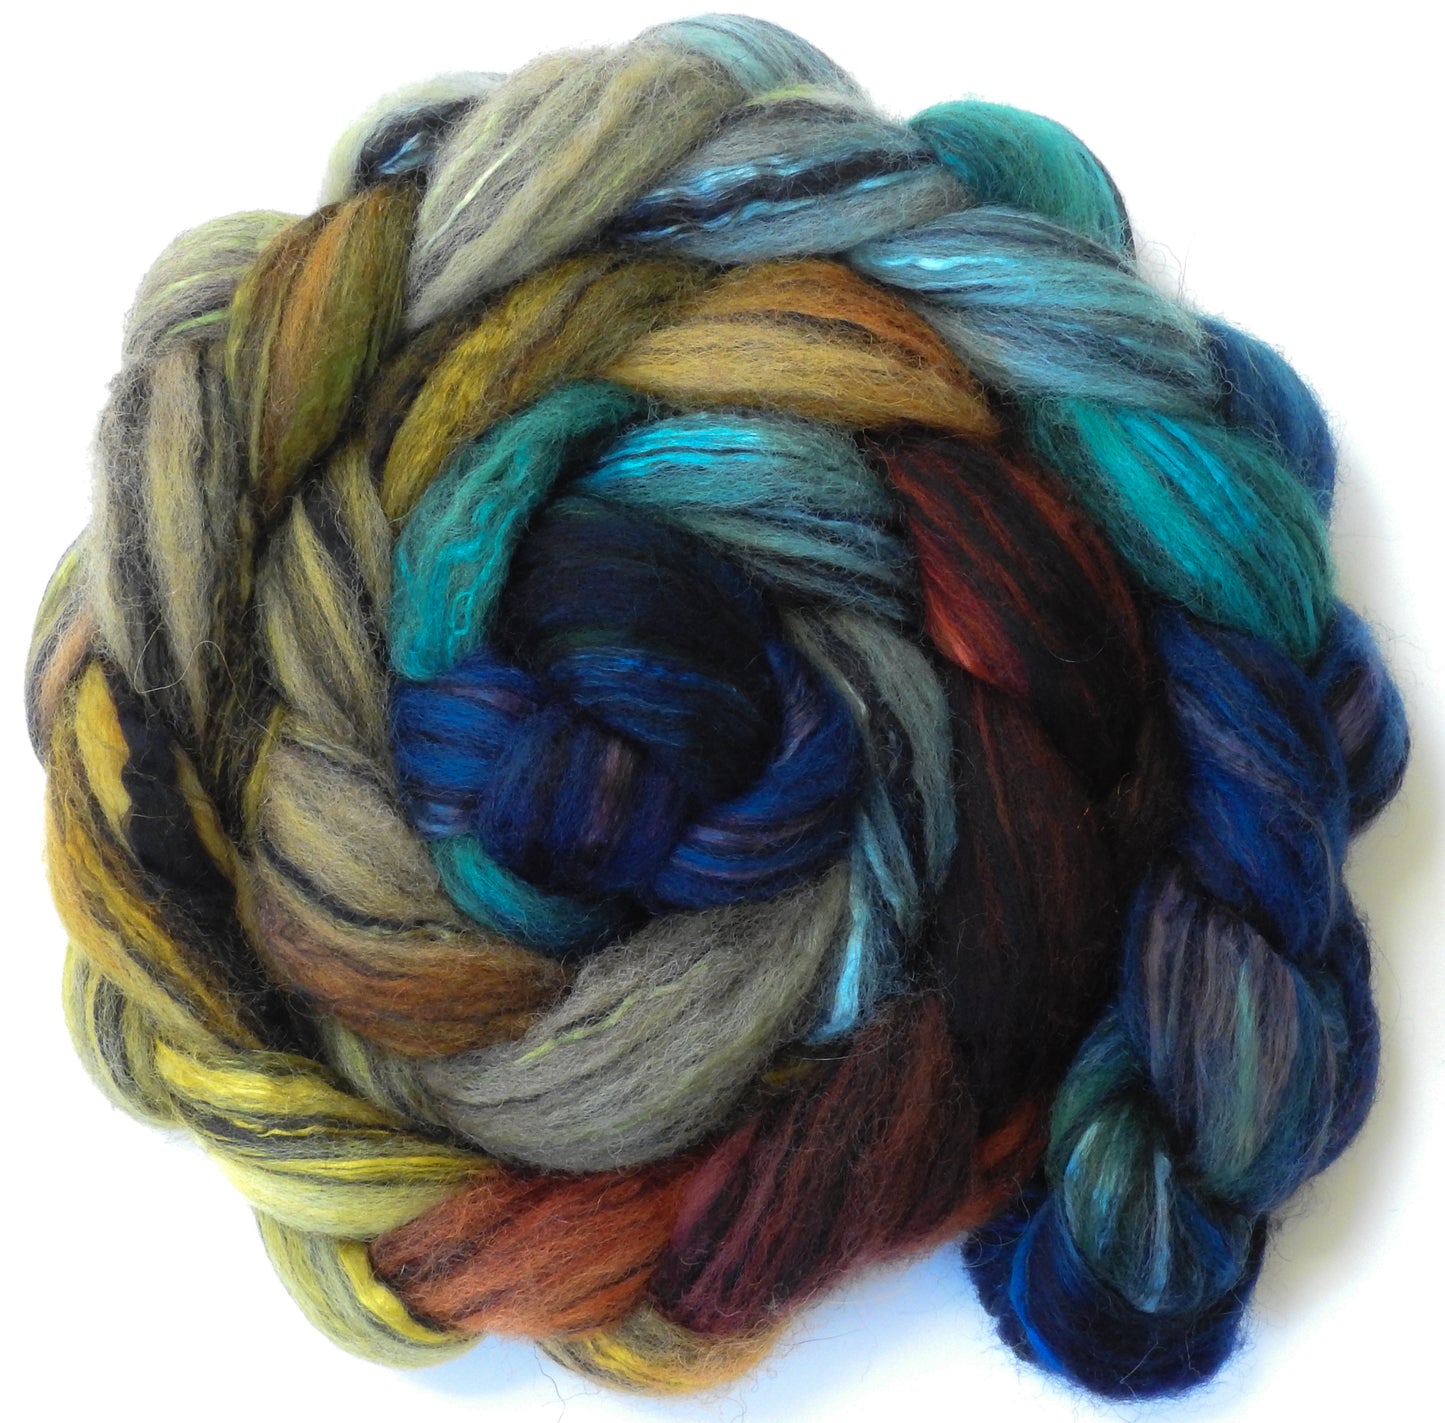 Harvest Moon (5.4 oz) Batt in a Braid #55- Shetland/ Mulberry Silk/ Black Bamboo (50/25/25)